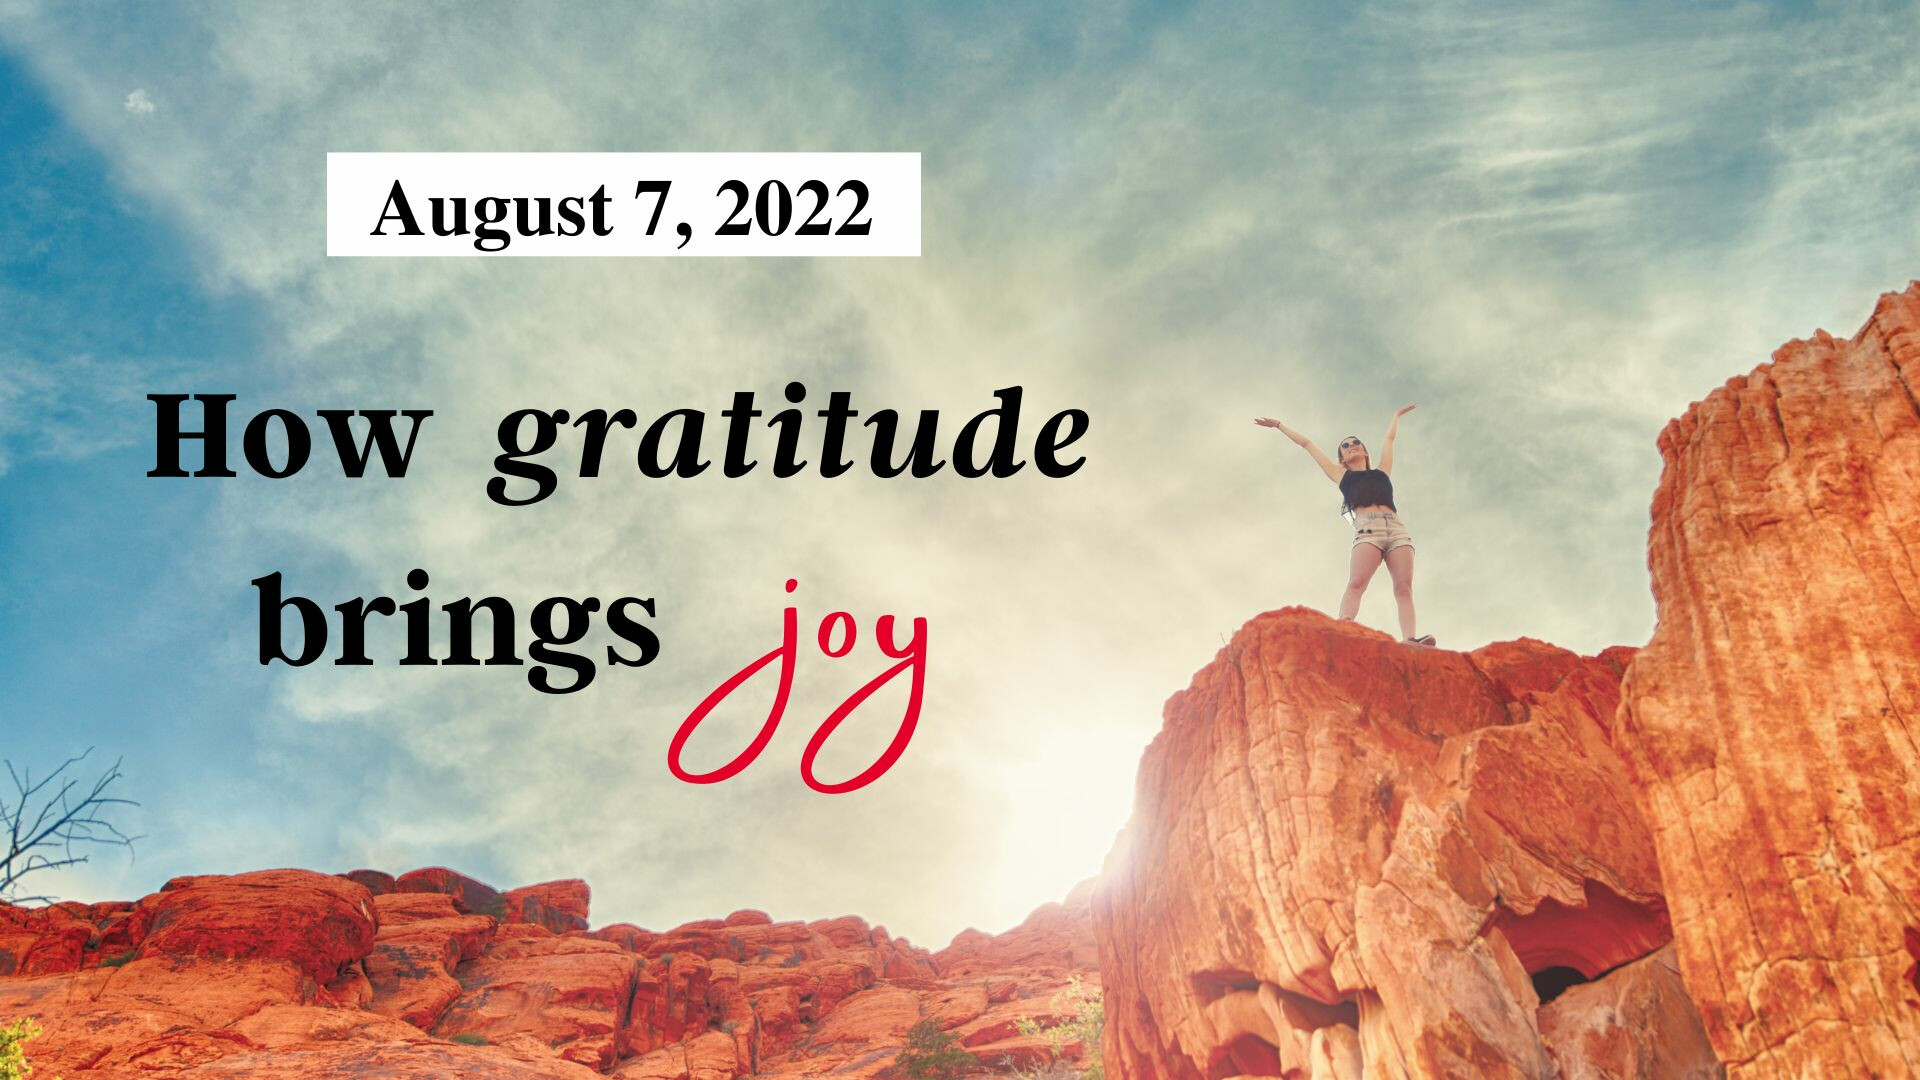 10:45 AM How gratitude brings joy